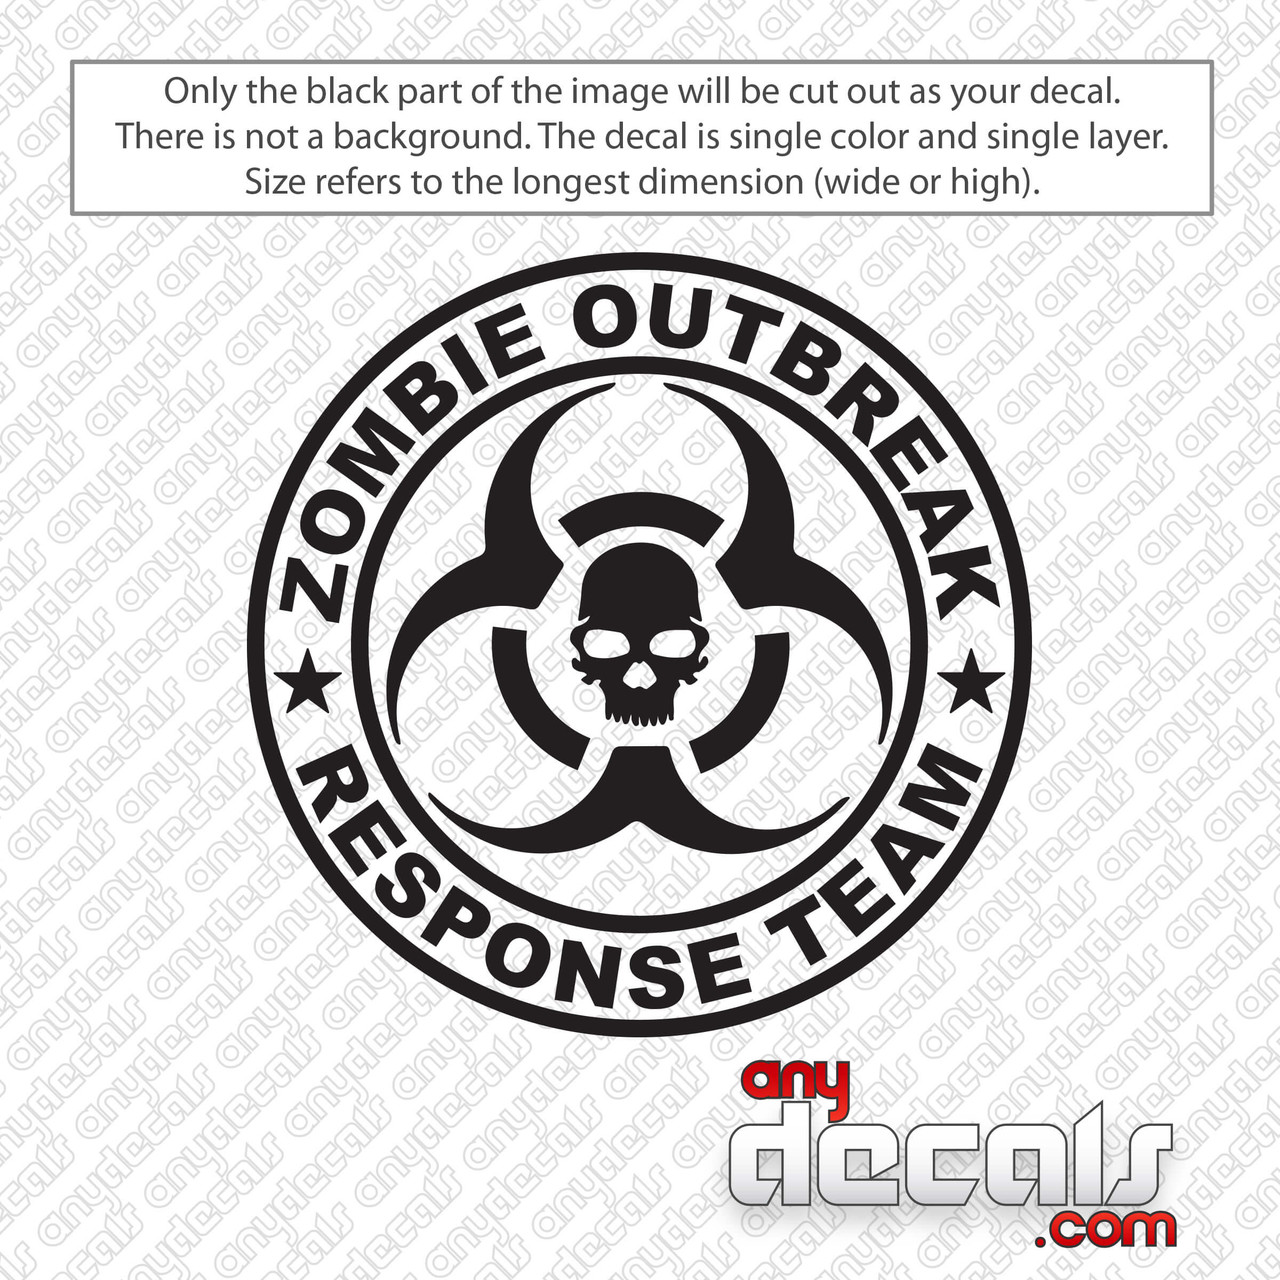 Zombie Outbreak sticker Biohazard #8 printed full colour self-adhesive car bike 